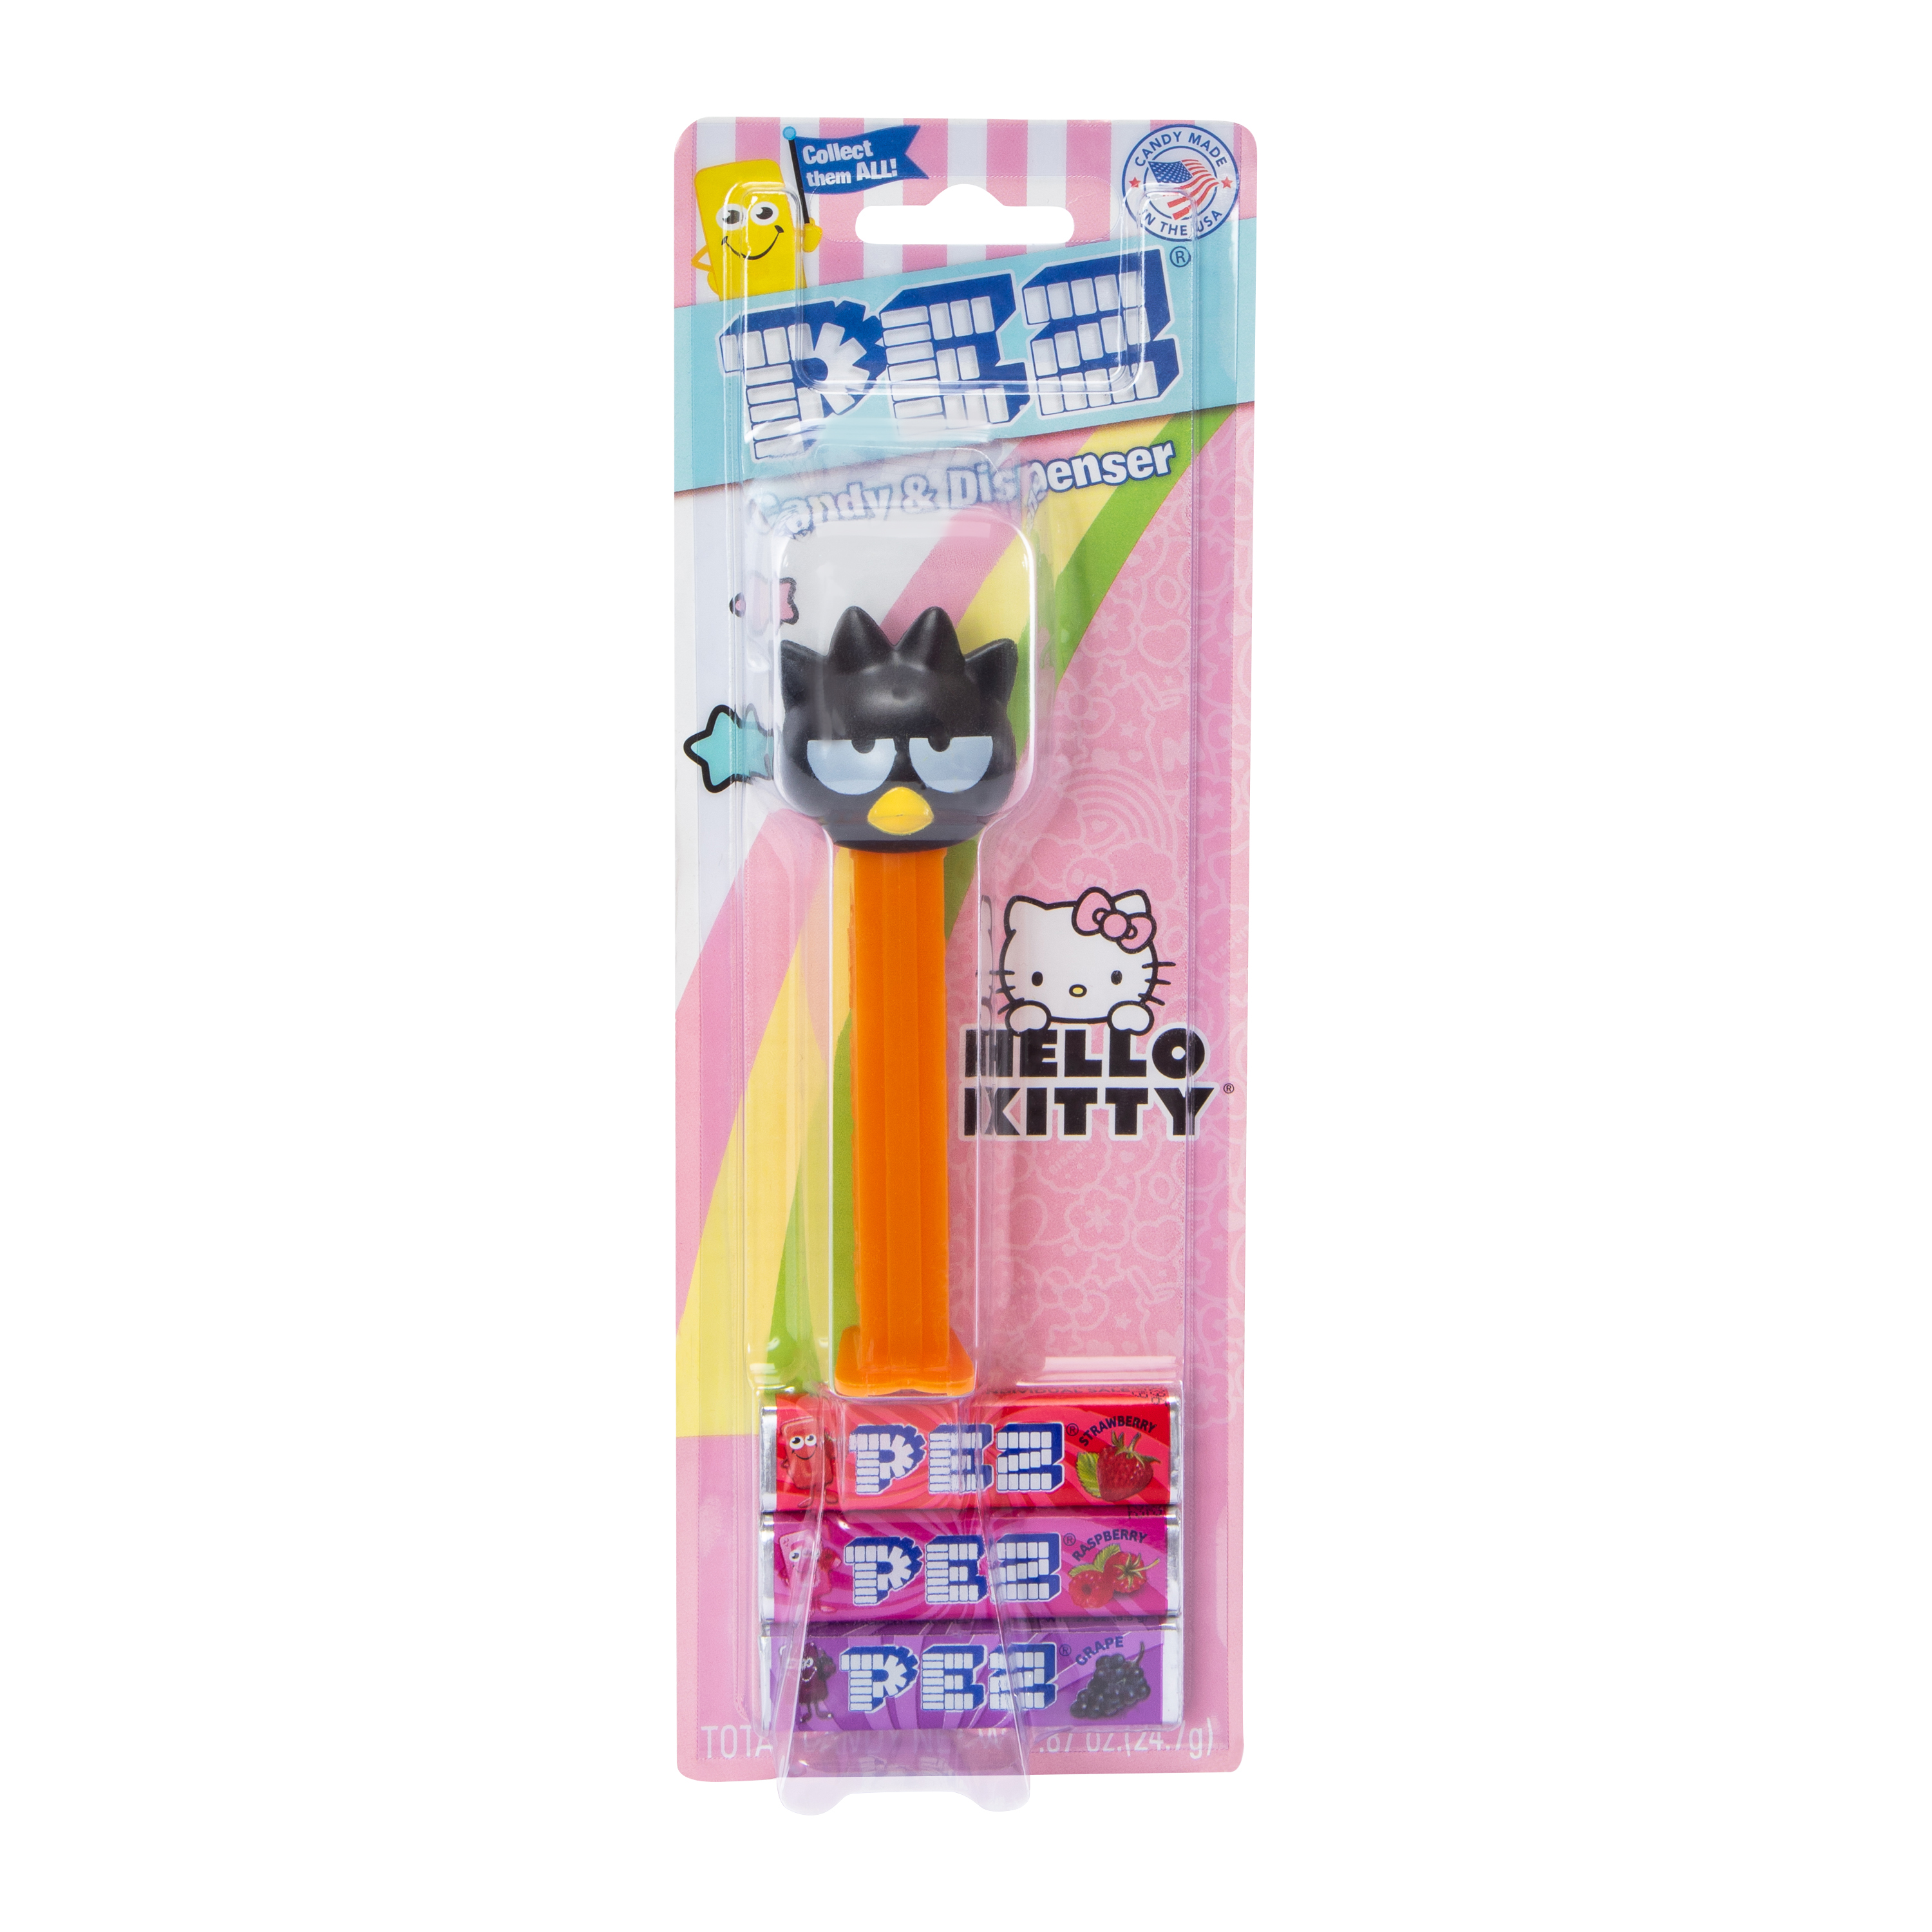 Pez® Hello Kitty® candy & dispenser